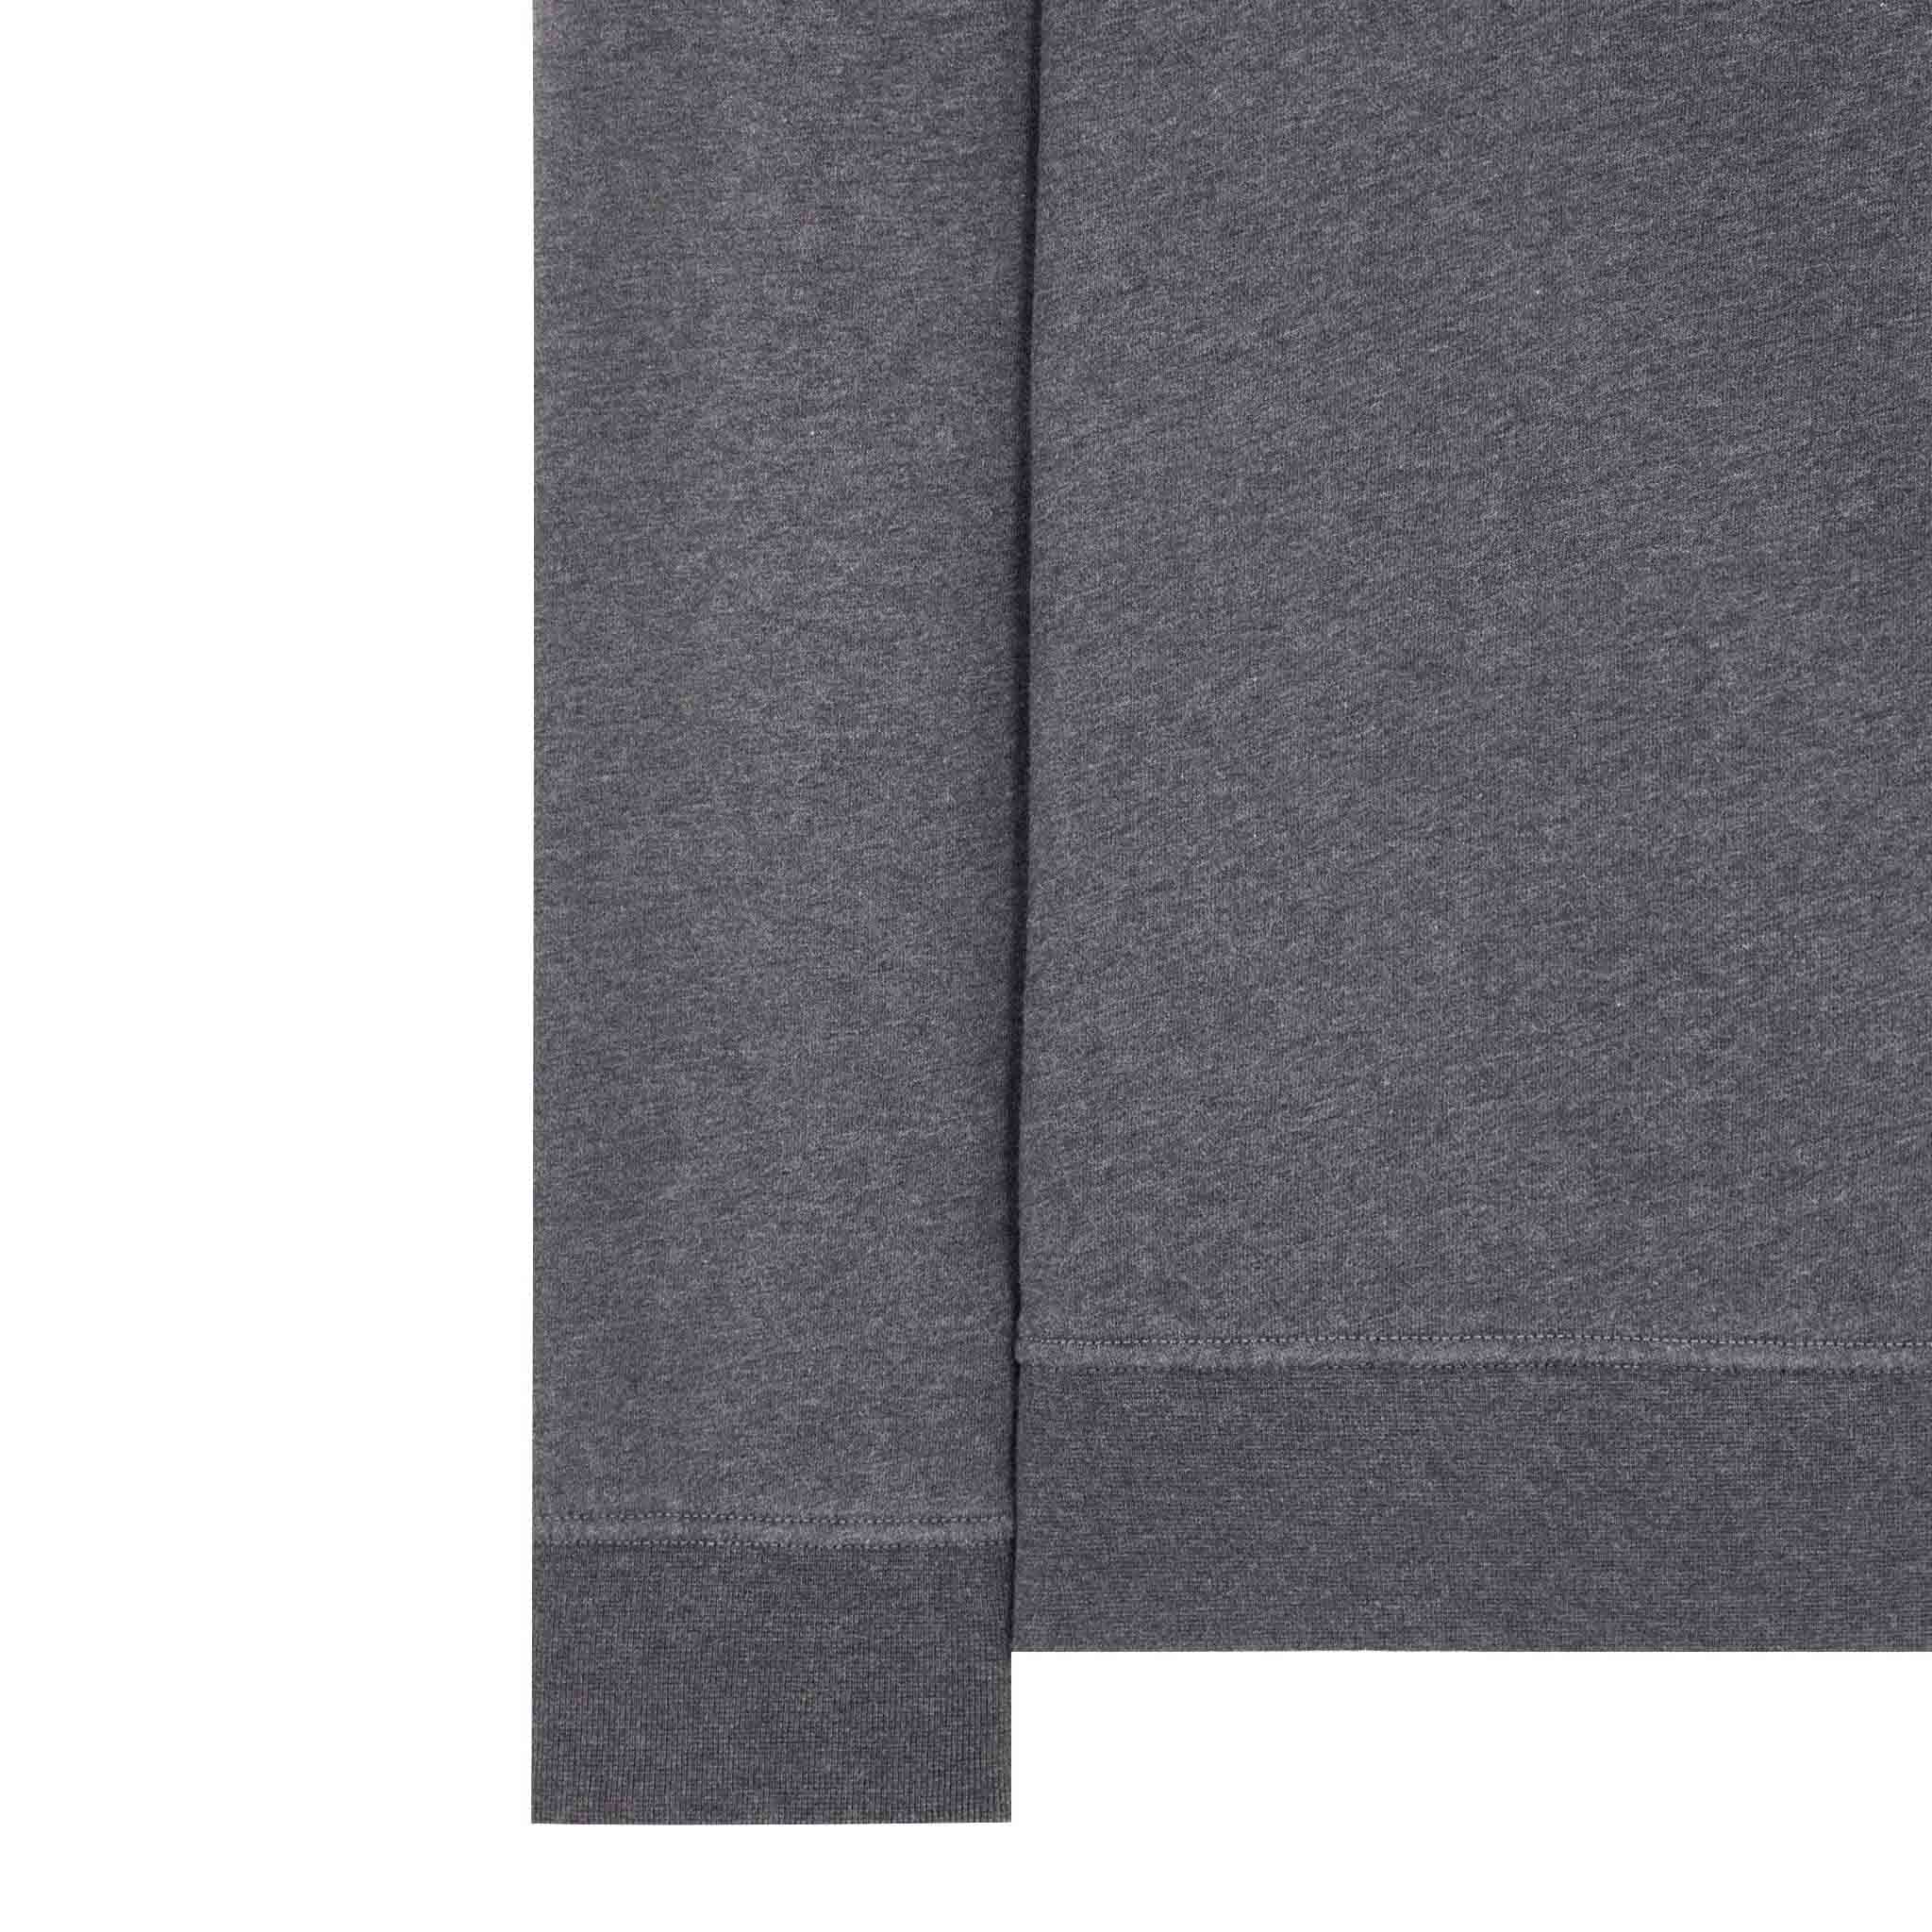 Stone Island Garment Dyed Crewneck Sweatshirt in Light Grey Melange